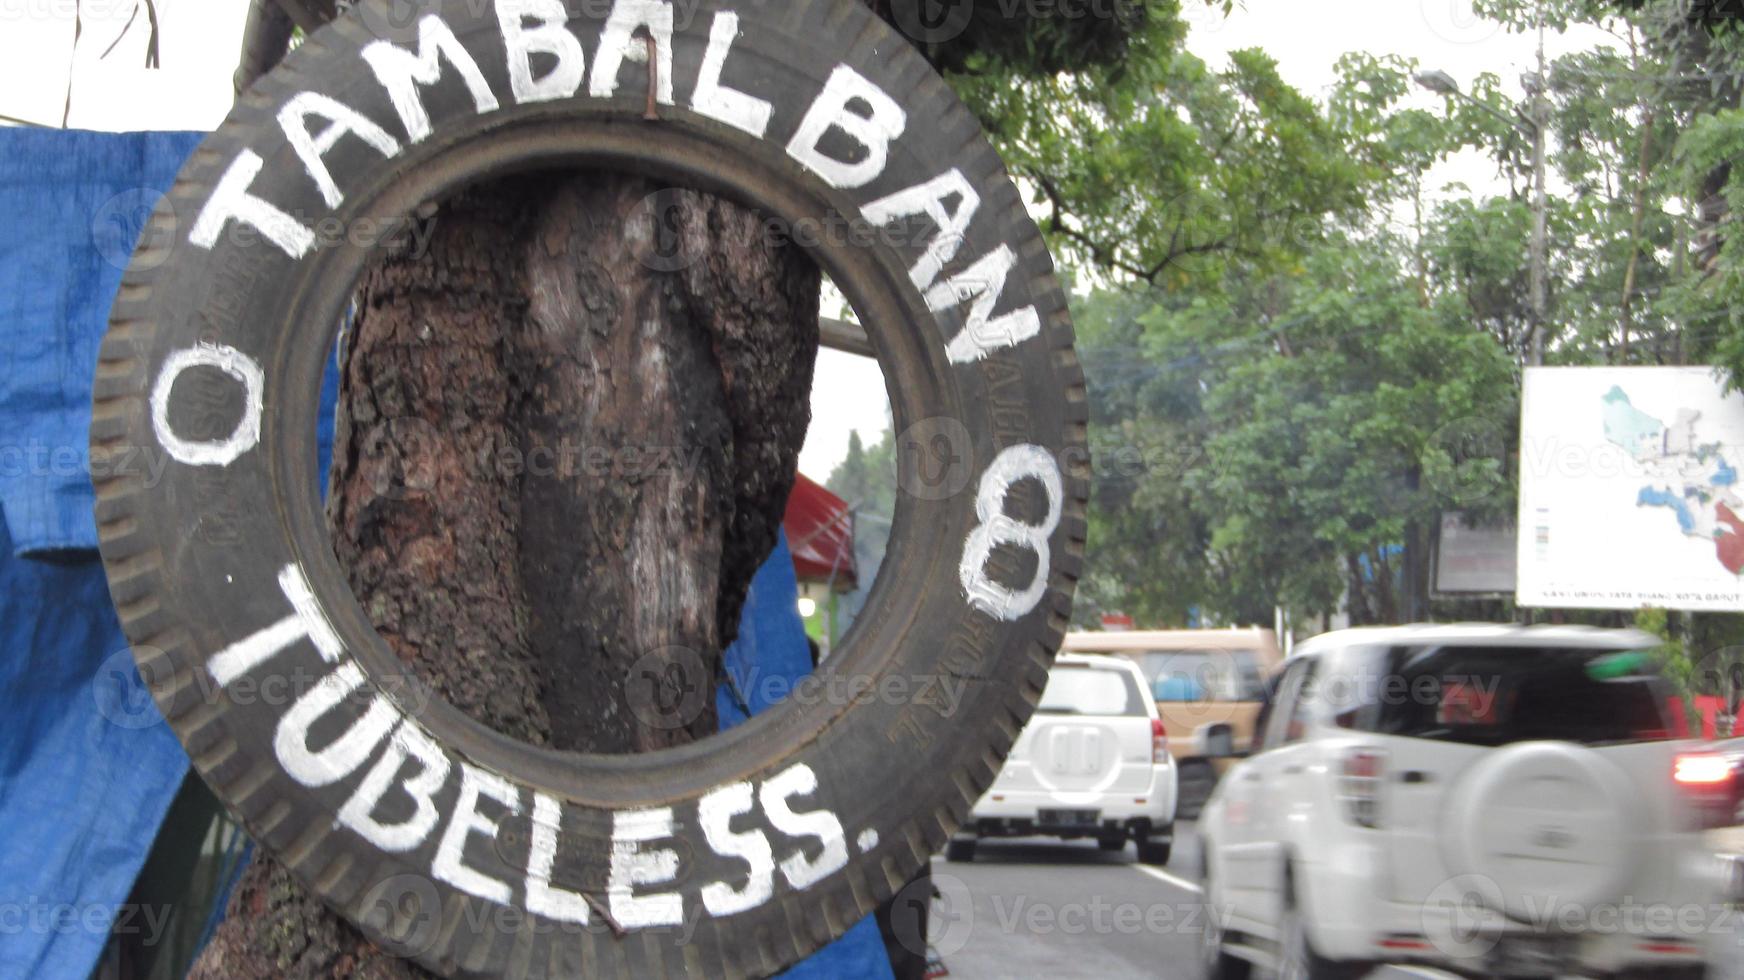 tambal ban sign on the tree photo